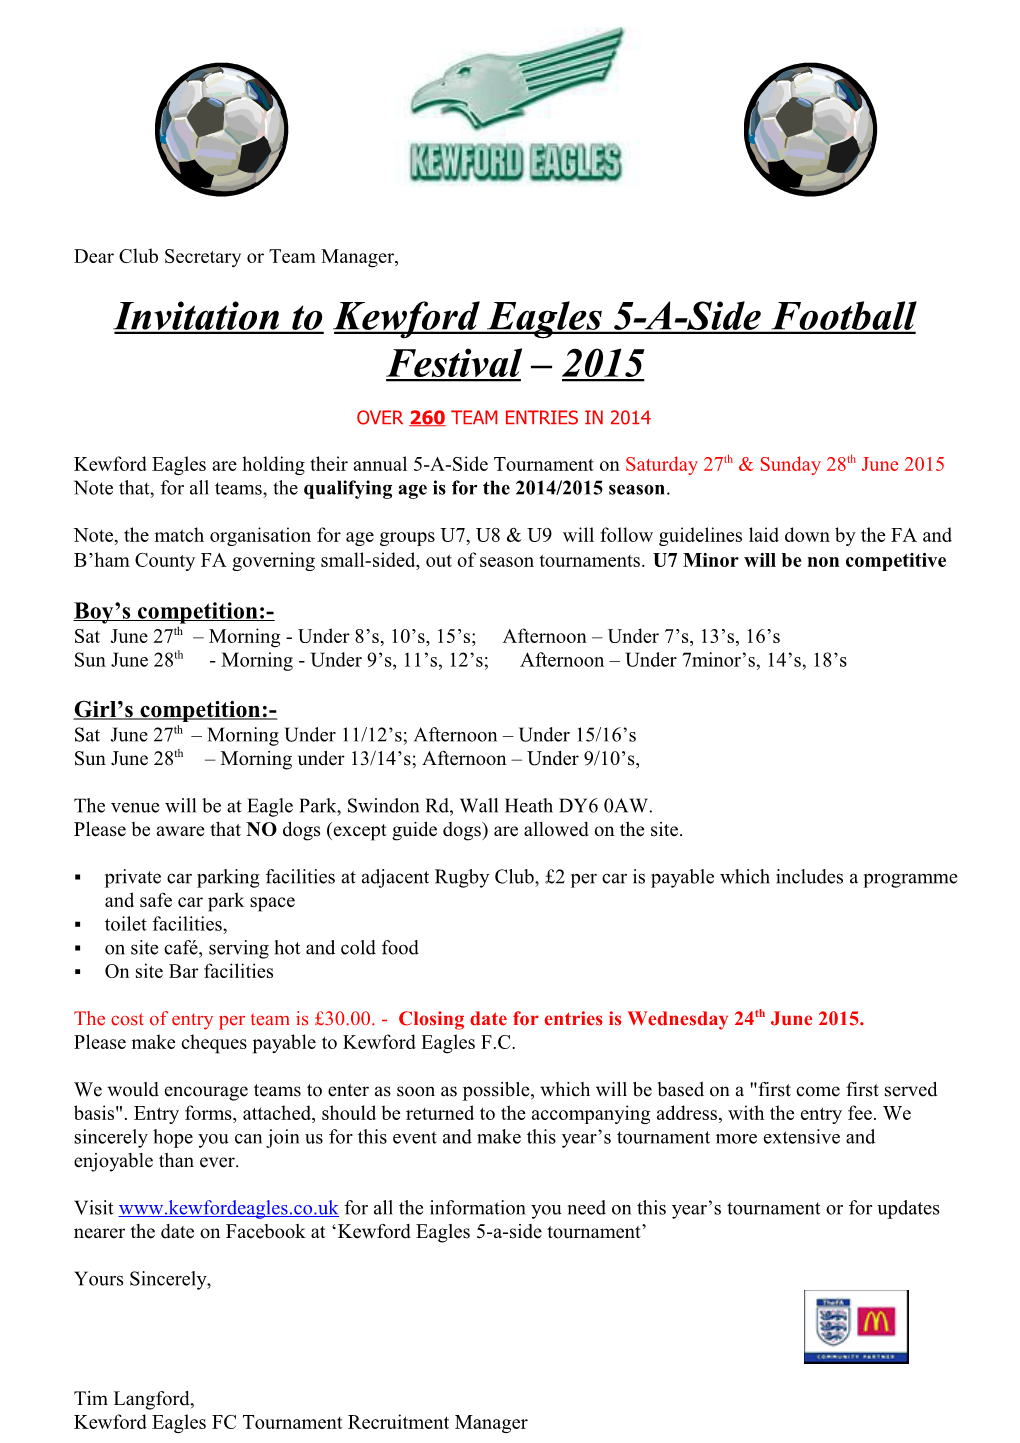 Invitation Tokewford Eagles 5-A-Side Football Festival 2015